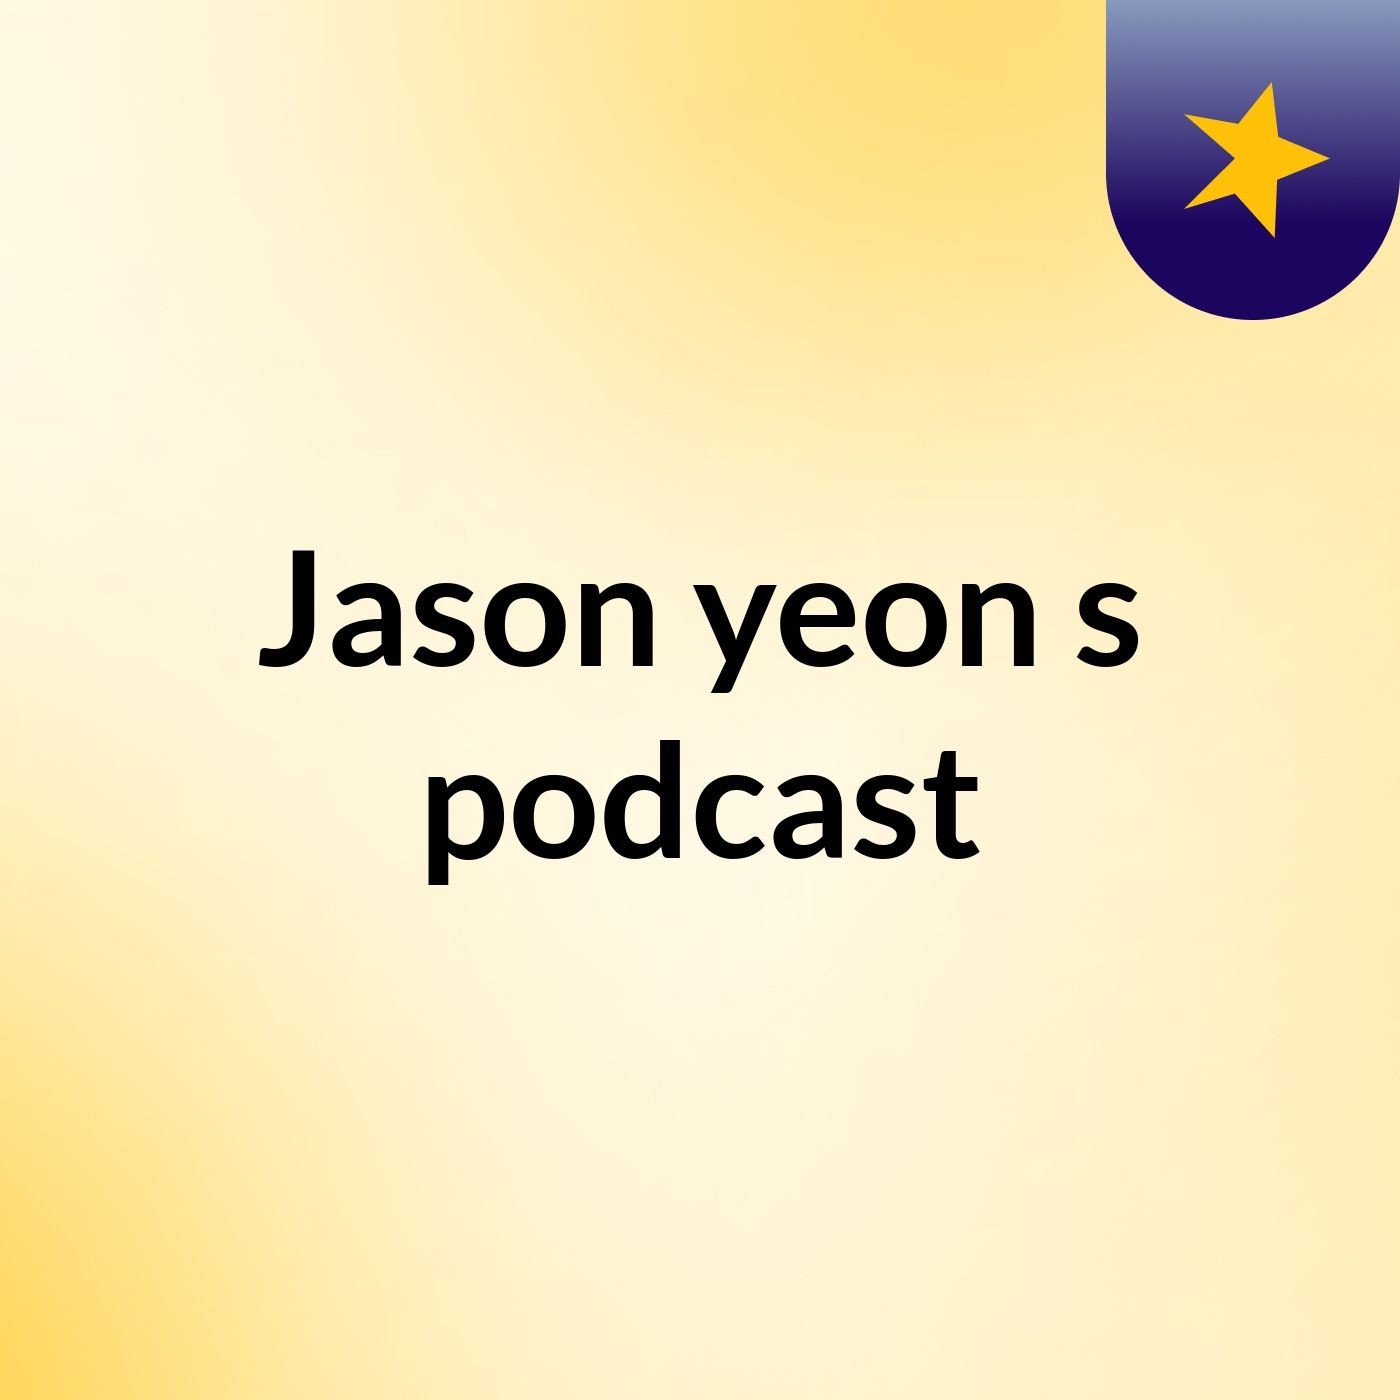 Jason yeon's podcast